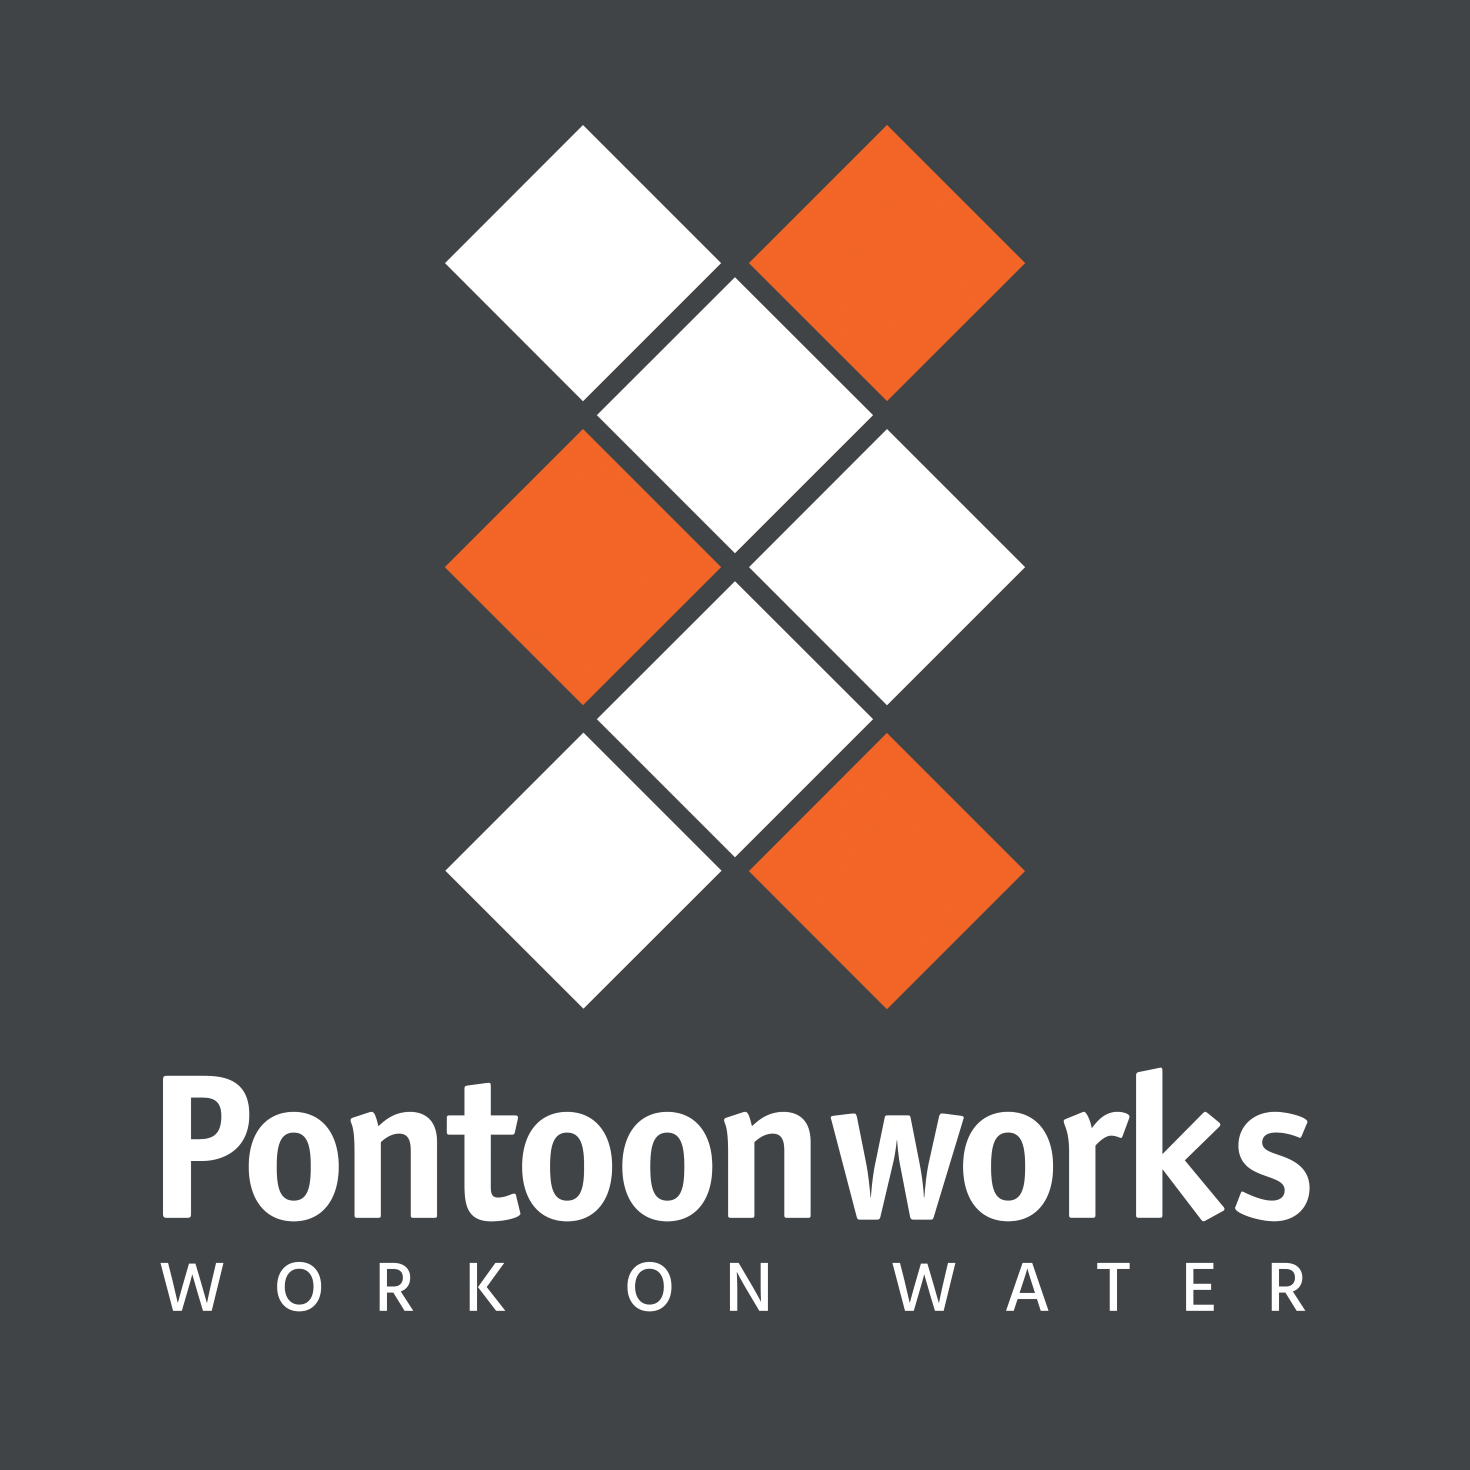 Pontoonworks